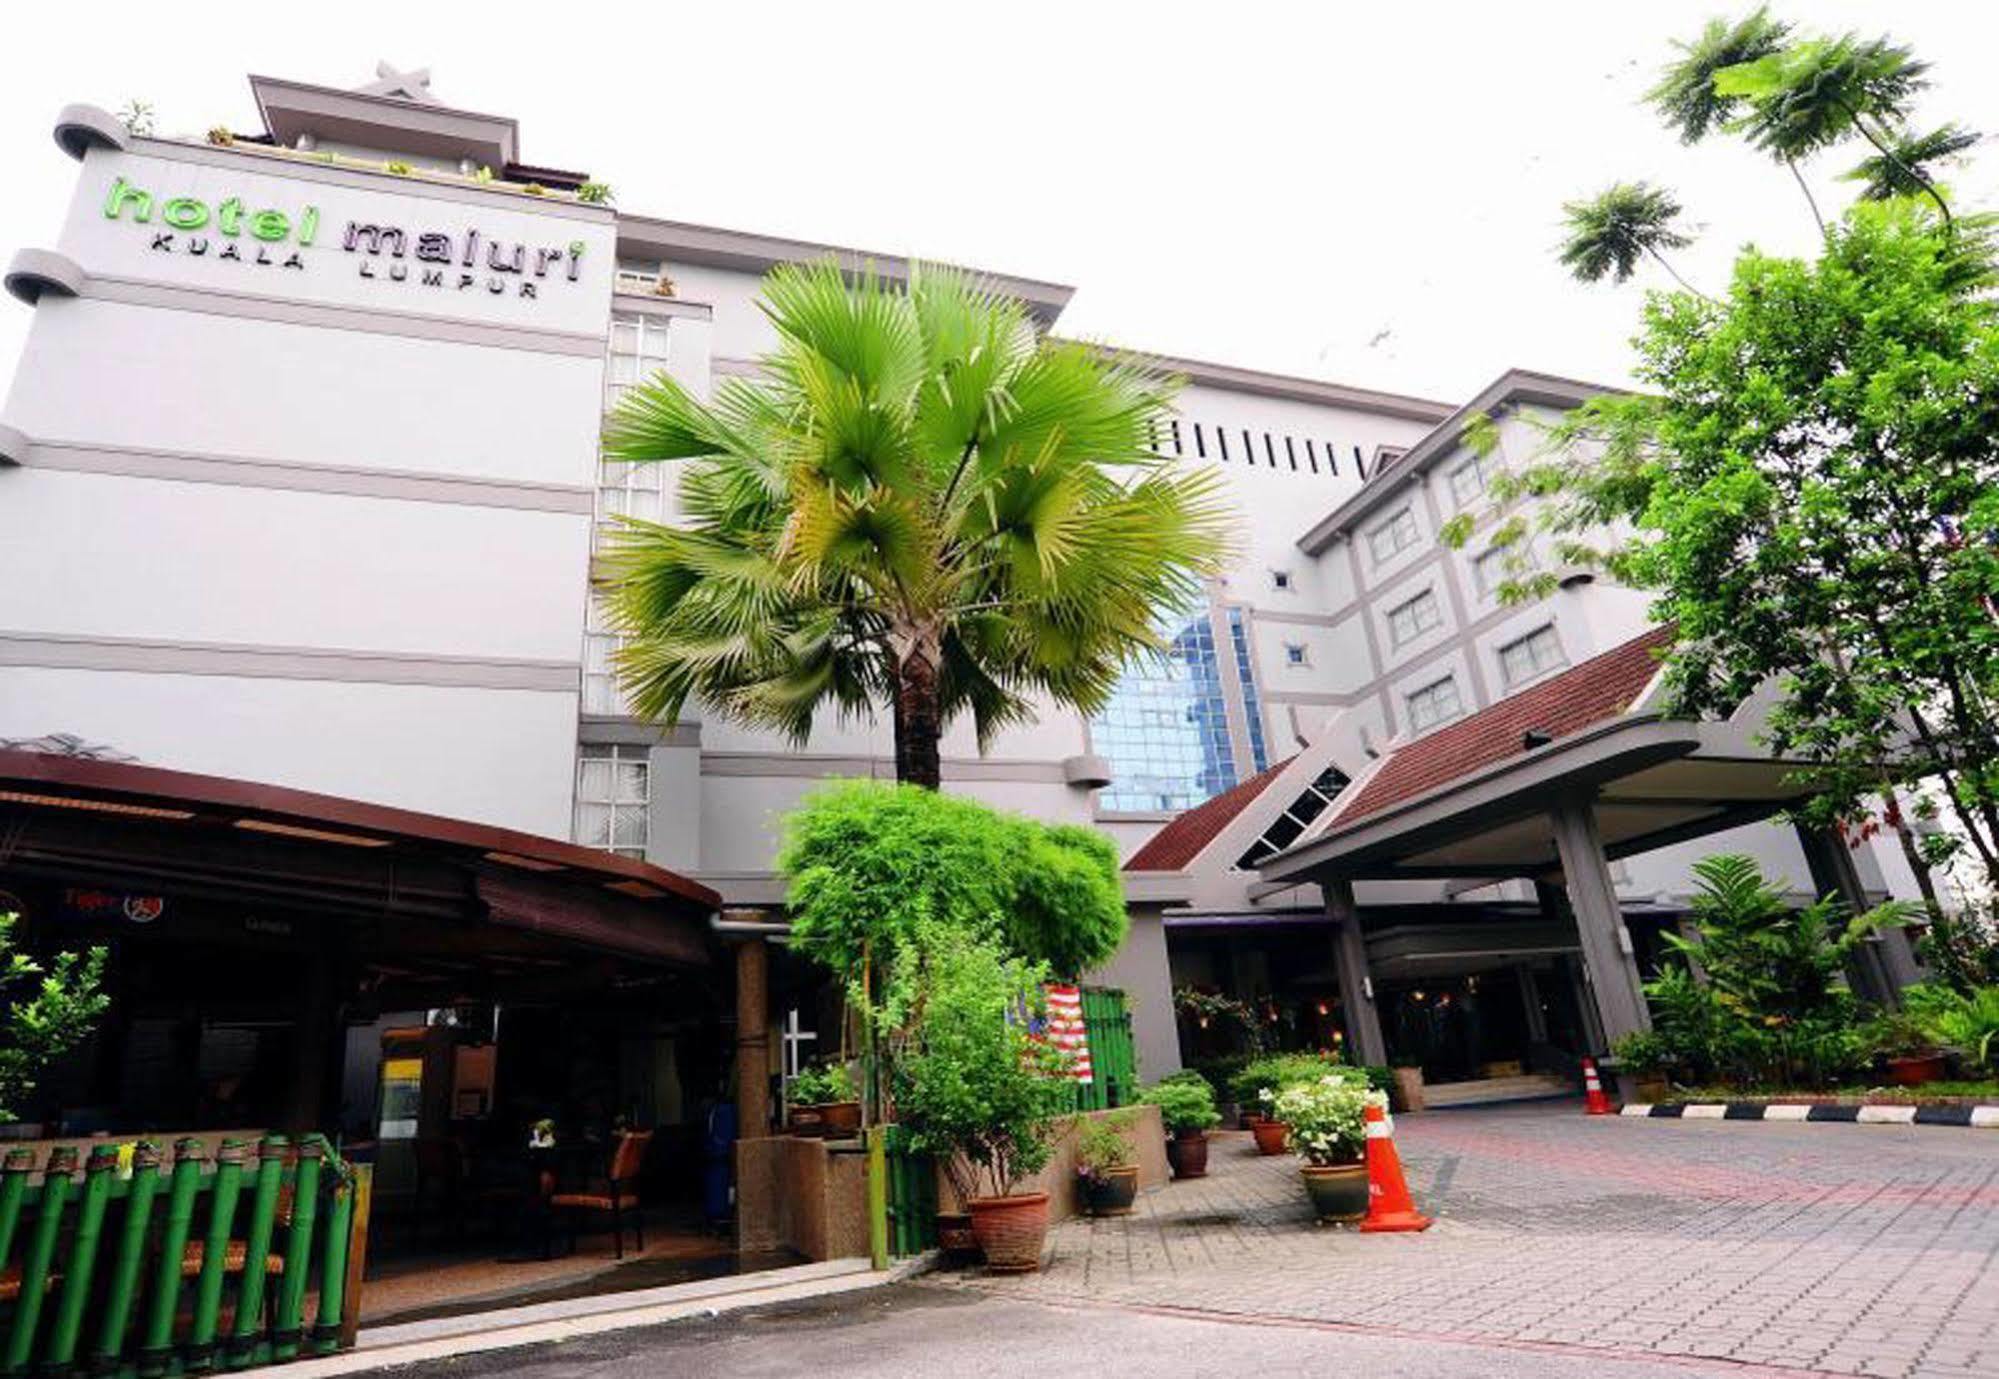 Hotel Maluri Kuala Lumpur Exterior foto